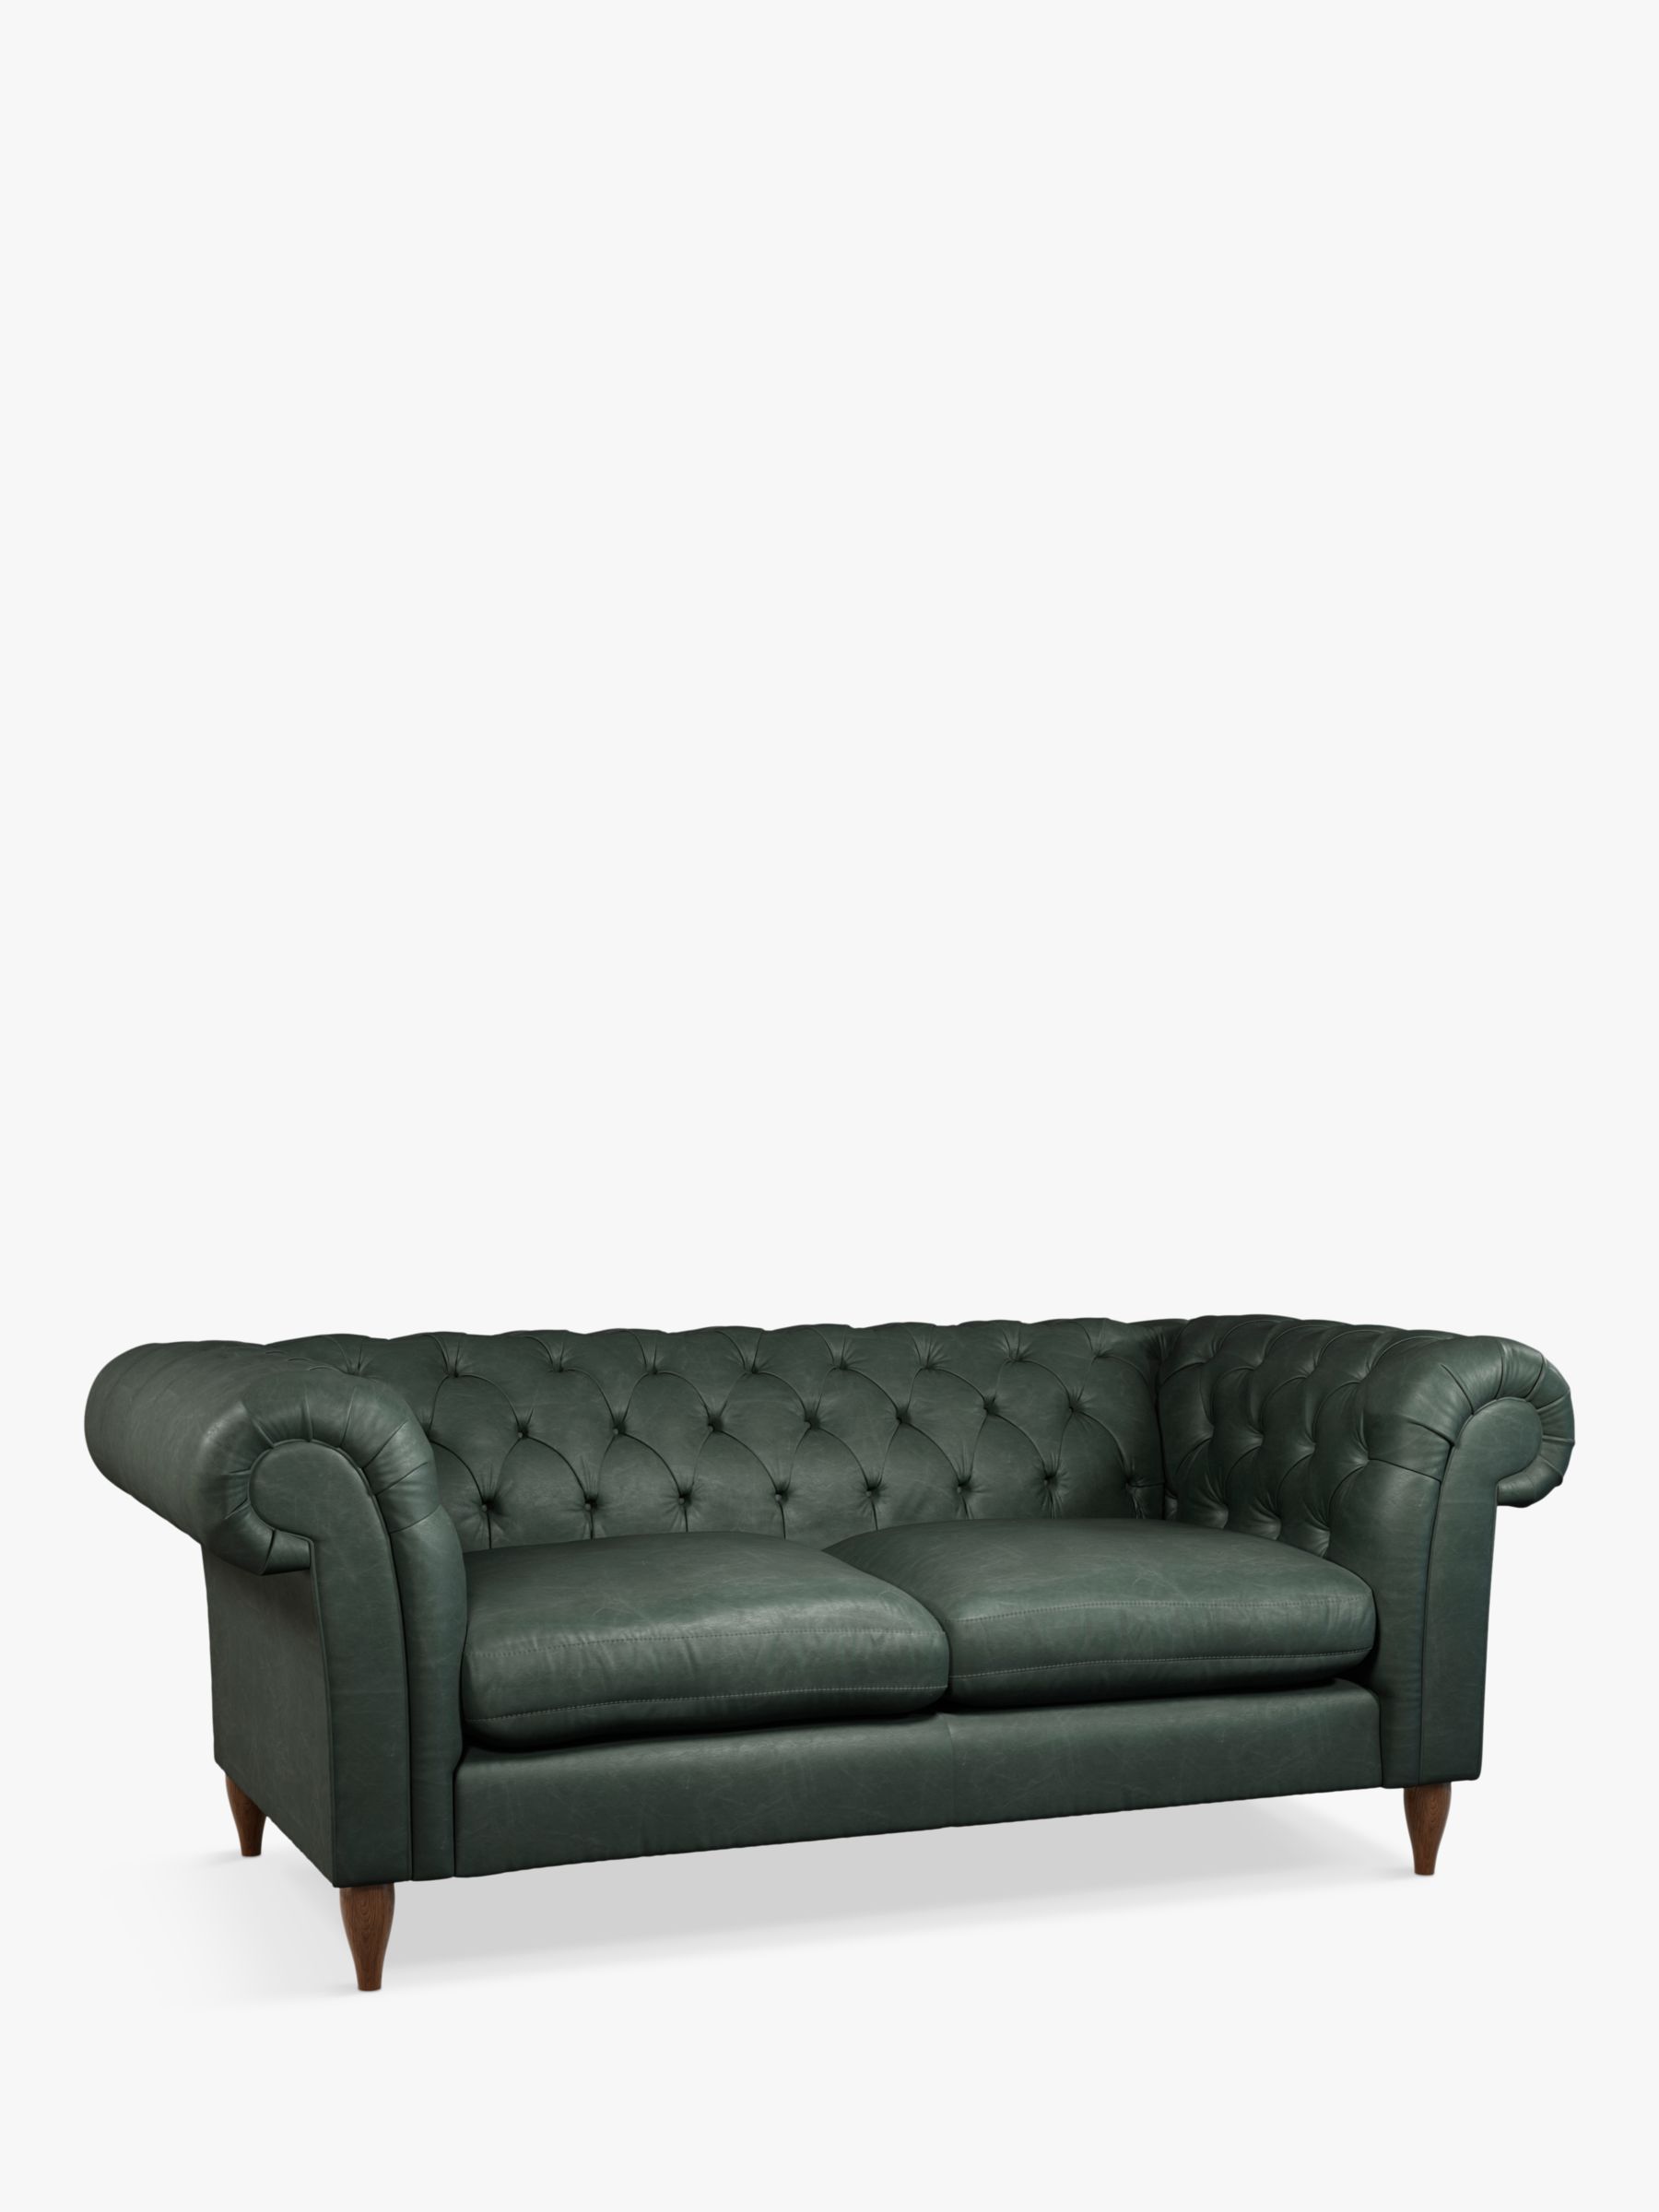 John Lewis Cromwell Chesterfield Large 3 Seater Leather Sofa, Dark Leg